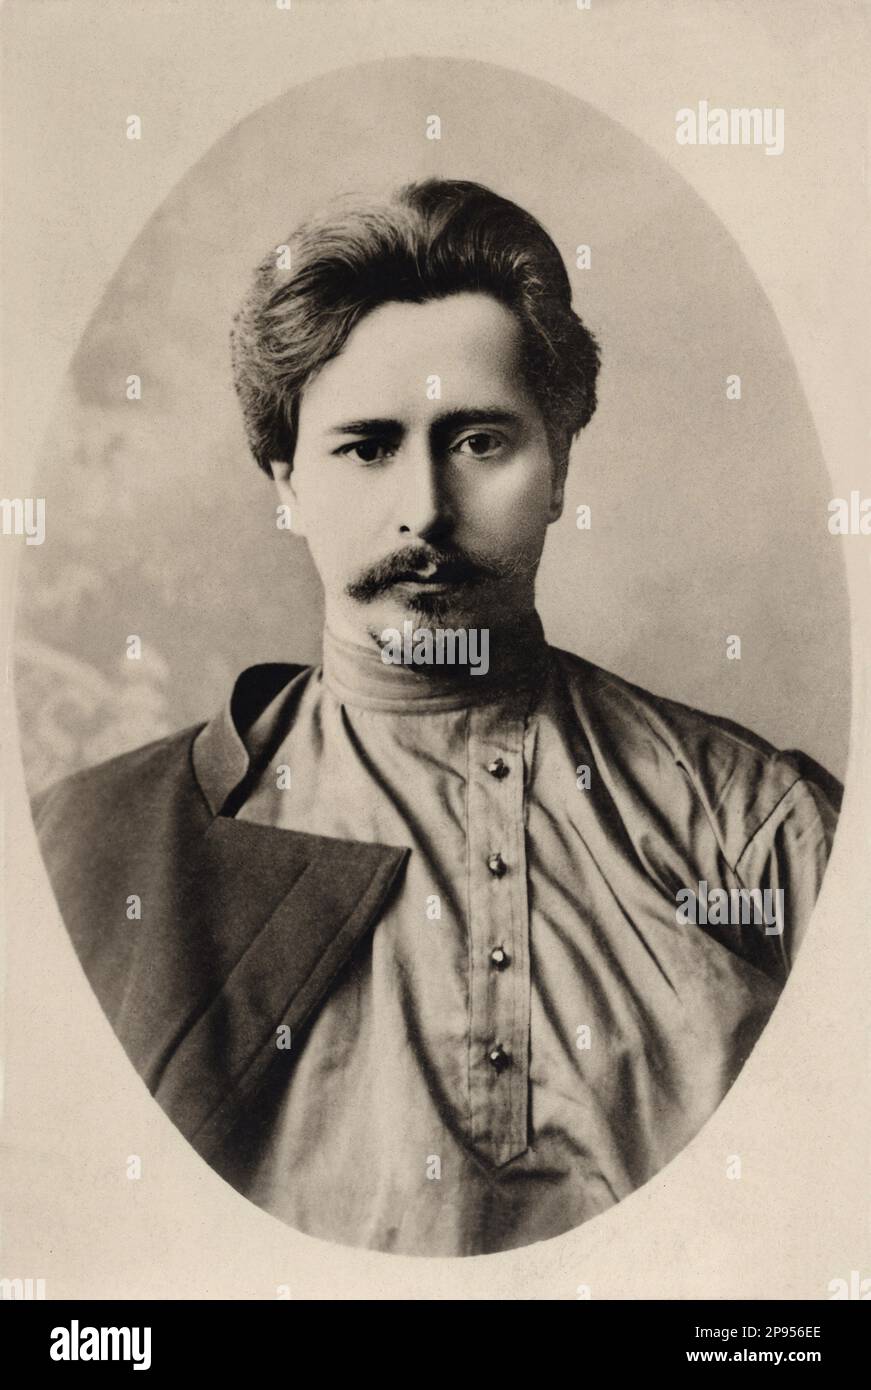 The russian writer and playwright LEONID Nikolaevic ANDREEV ( 1871 - 1919 ) , close friend of writer  Maksim Gorkij  ( 1868 - 1936 ). - ANDREYEV - ANDREIYEV - portrait - ritratto - baffi - moustache - barba - beard - LETTERATO - SCRITTORE - LETTERATURA -  Literature - PORTRAIT - RITRATTO  - POET - POETA - POESIA - POETRY - ---- Archivio GBB Stock Photo